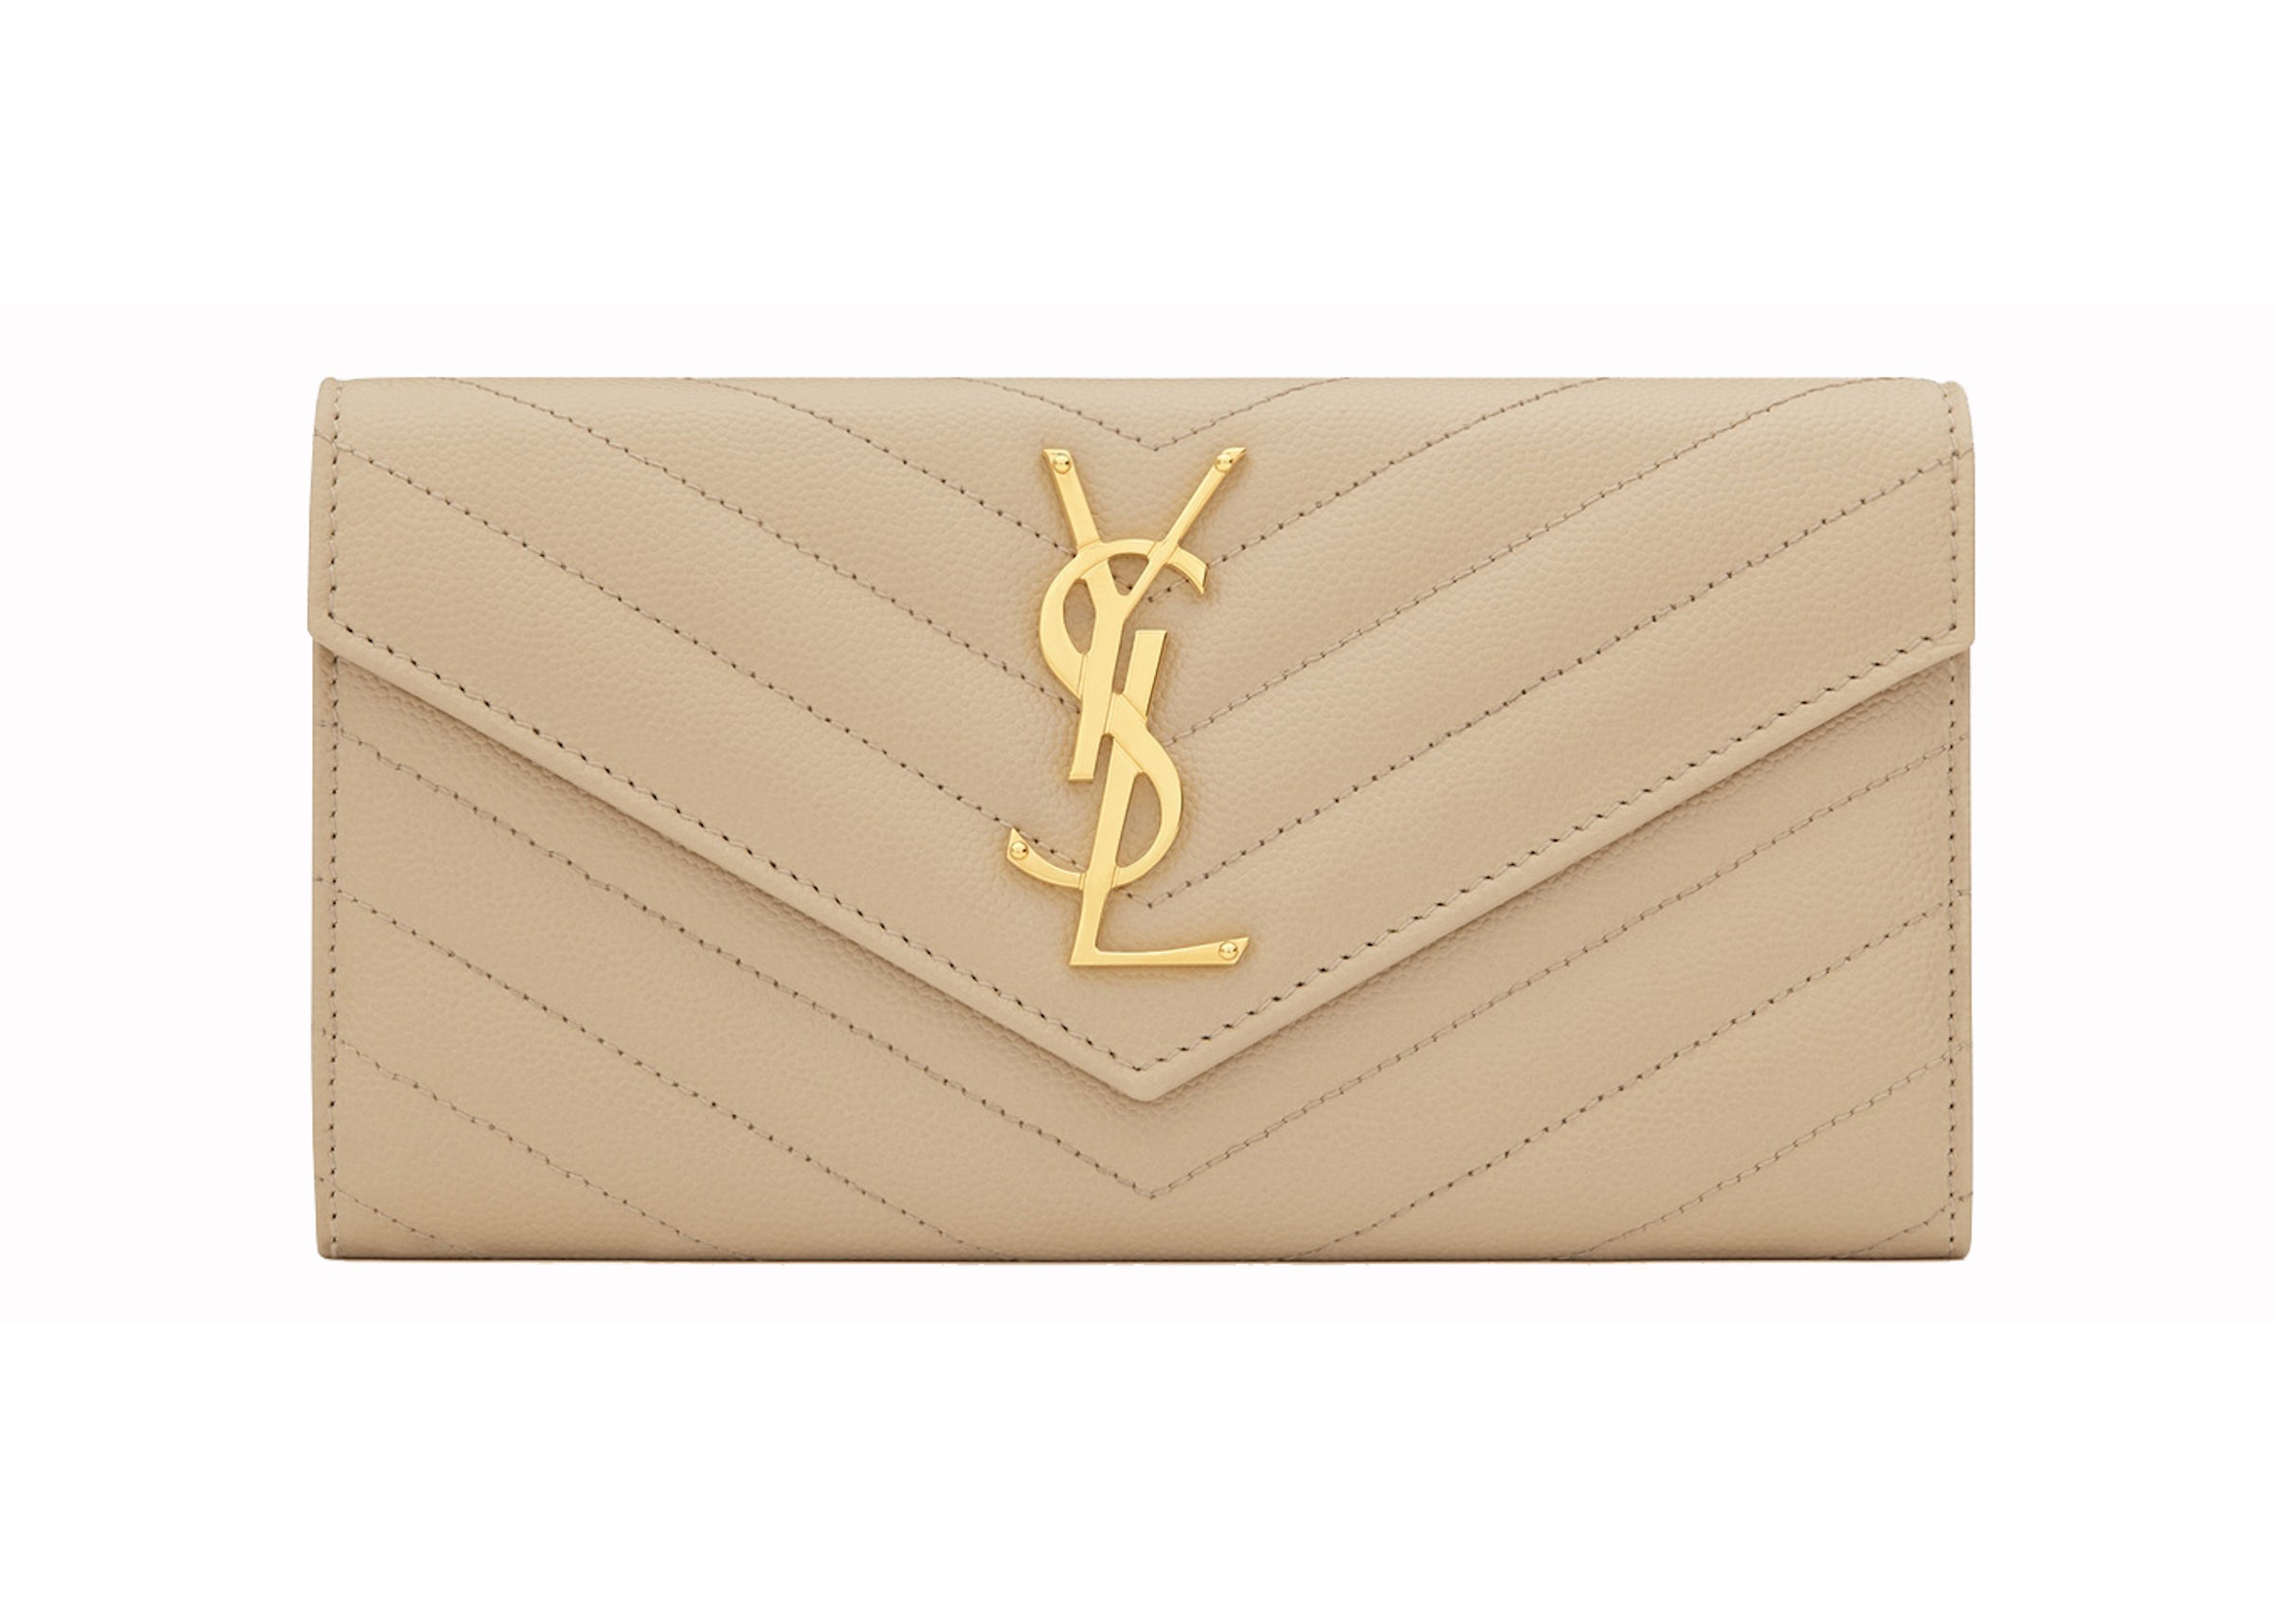 Saint Laurent Small Ysl Envelope Flap Wallet on Chain Black